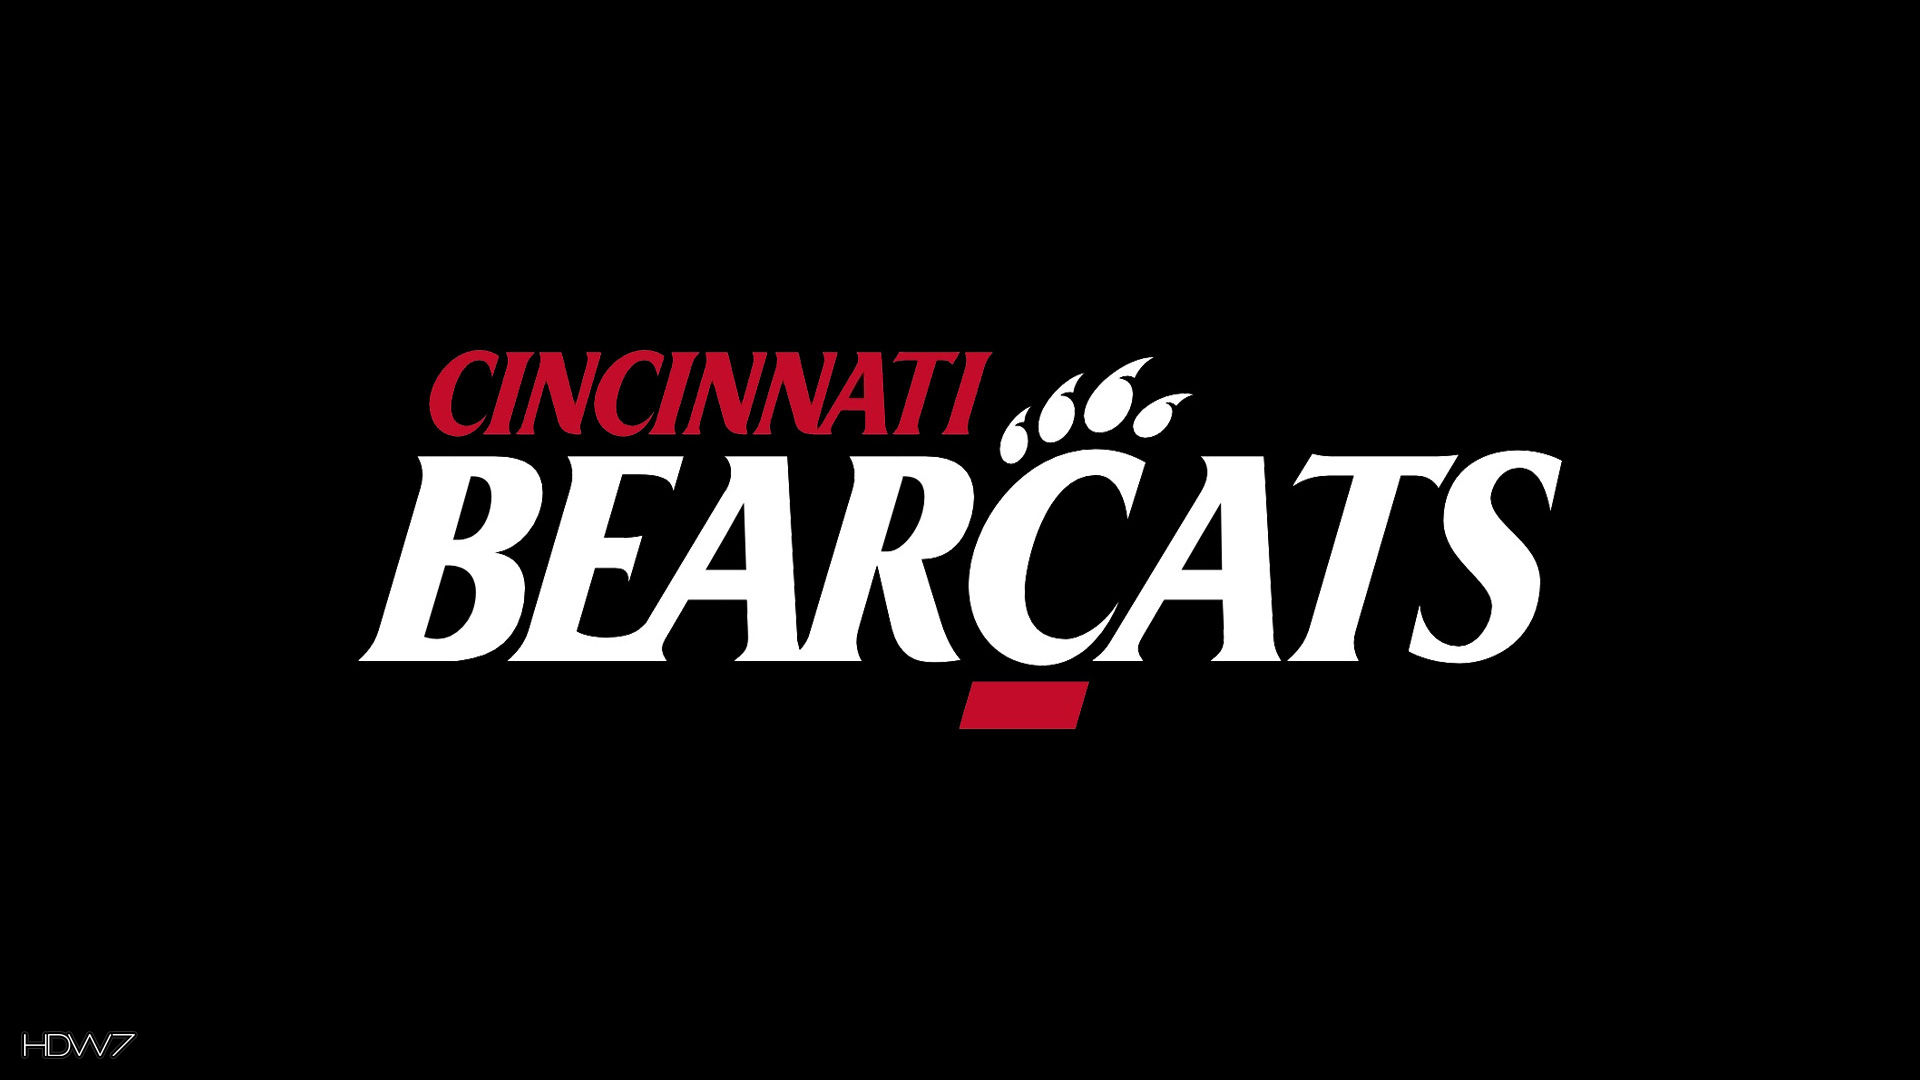 New Wallpaper Cincinnati Bearcats